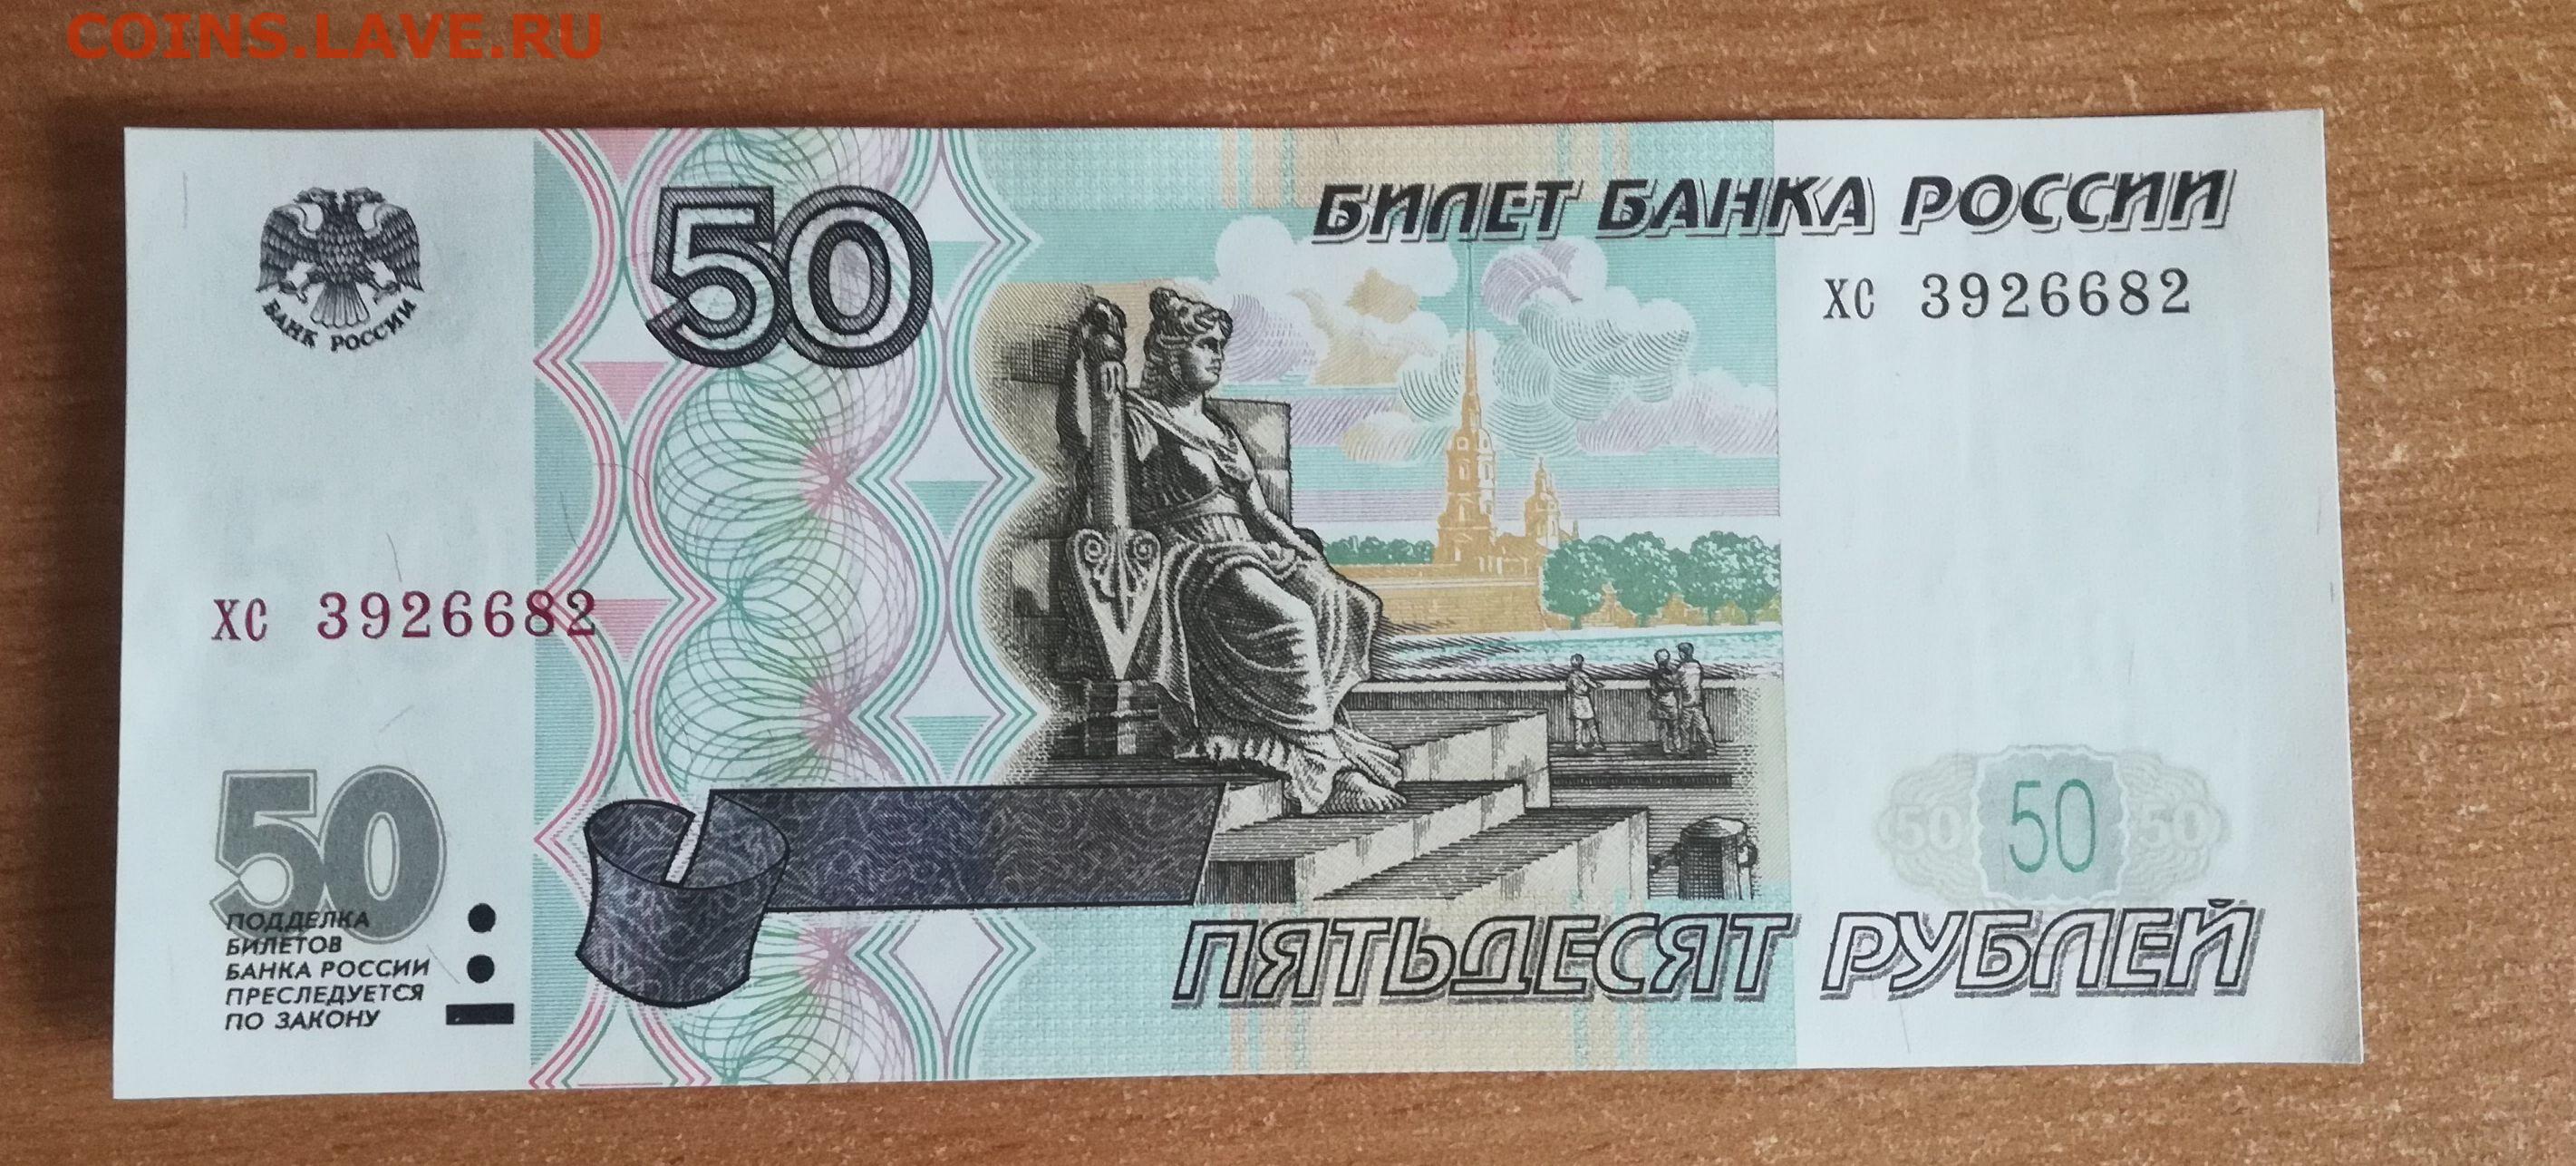 50 рублей уплачено за. 50 Рублей 1997. 50 Рублей без модификации. 50 Р без модификации. 50 Рублей 1997 модификация 2001.